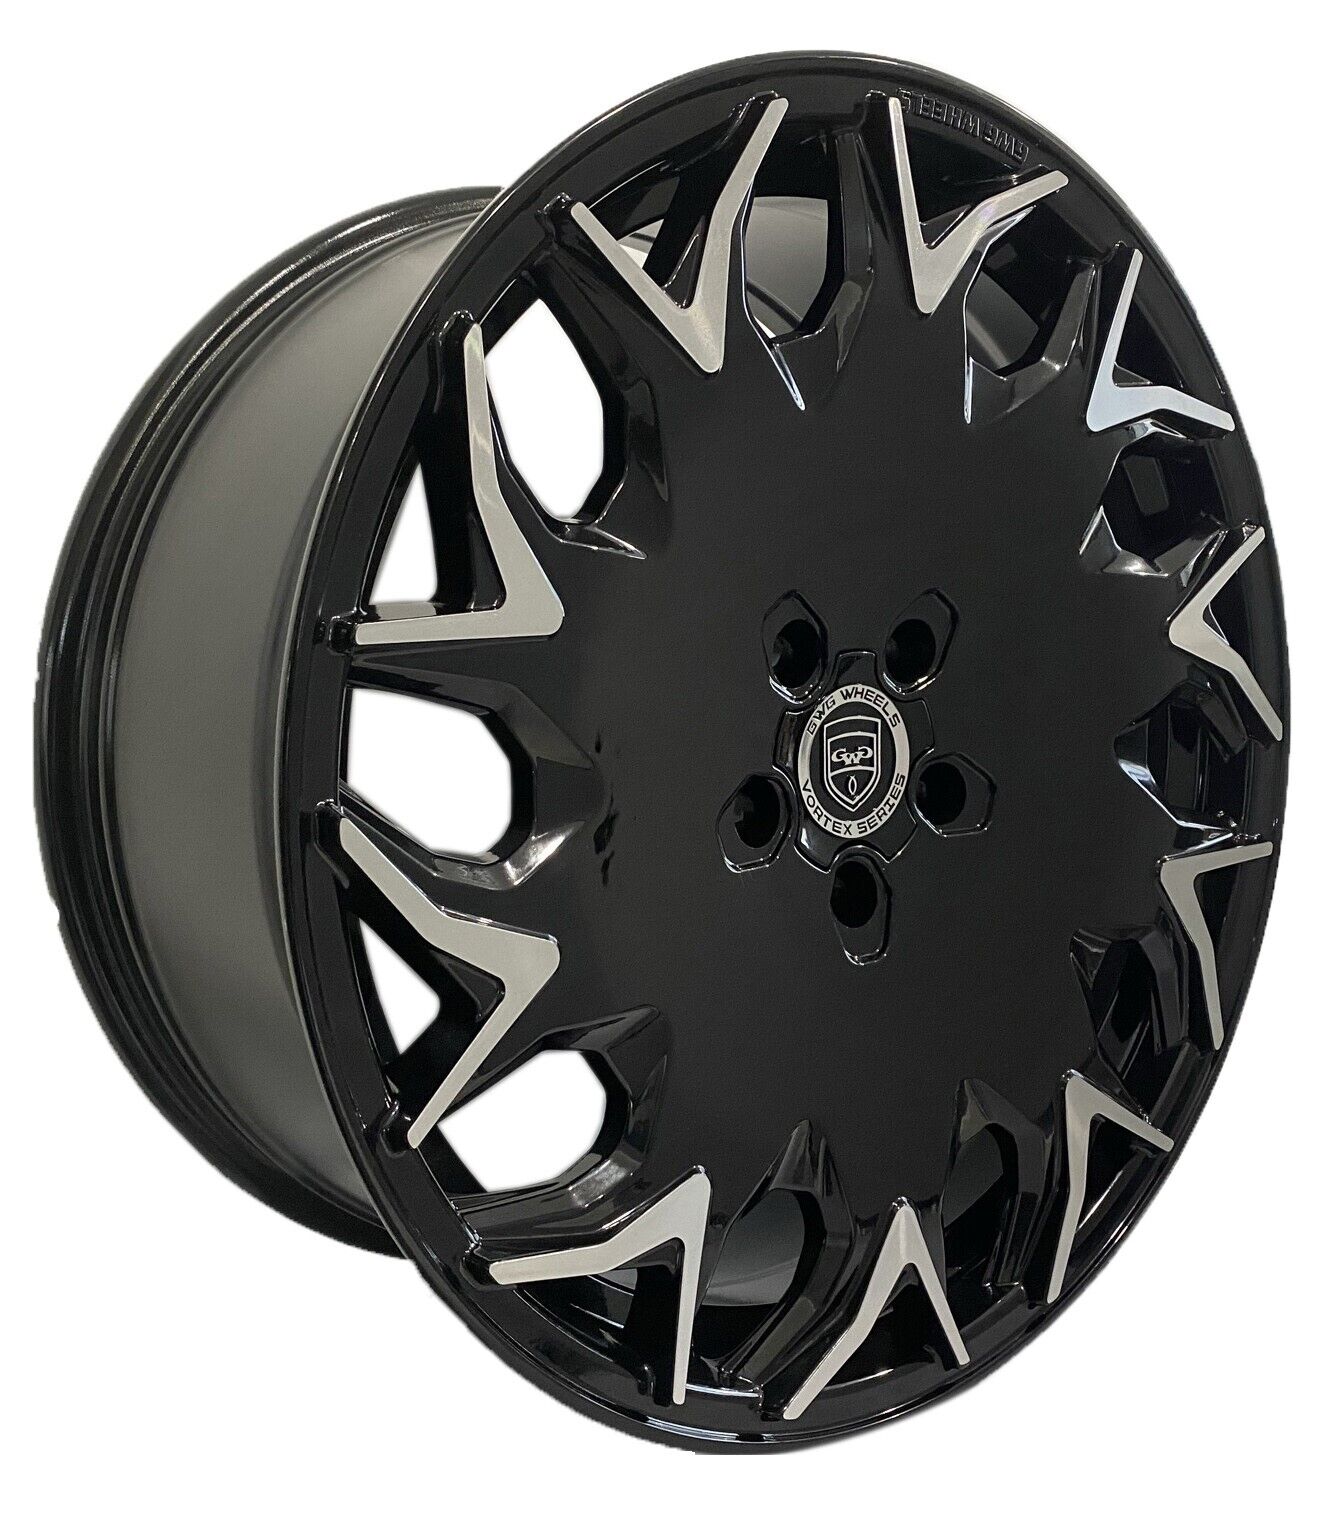 4 GV06 20 inch Staggered Black Rims fits PONTIAC G8 GT 2008 - 2009